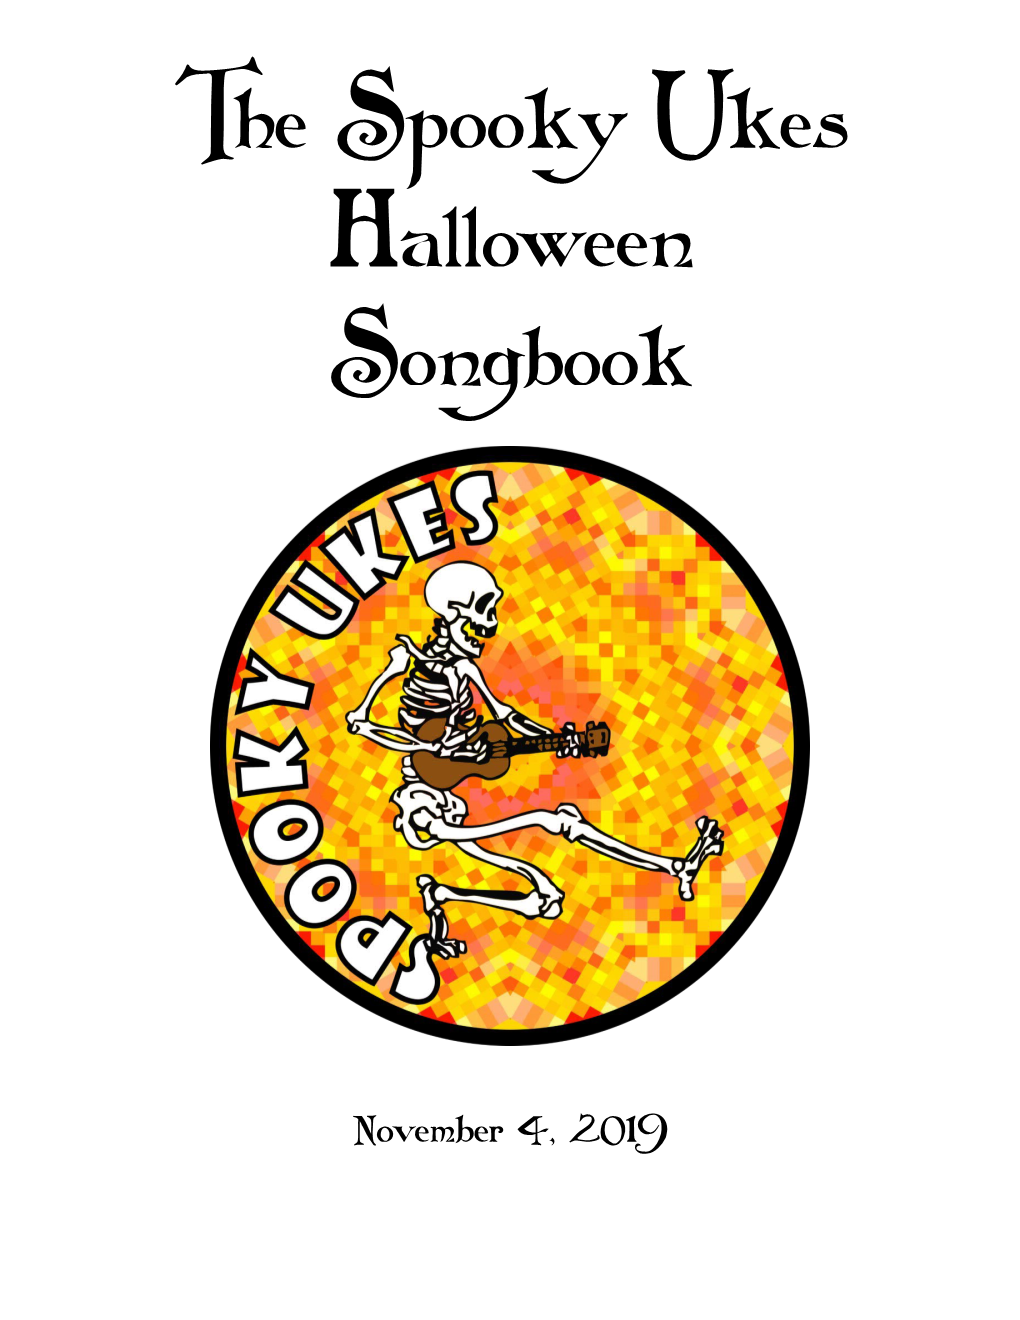 The Spooky Ukes Halloween Songbook